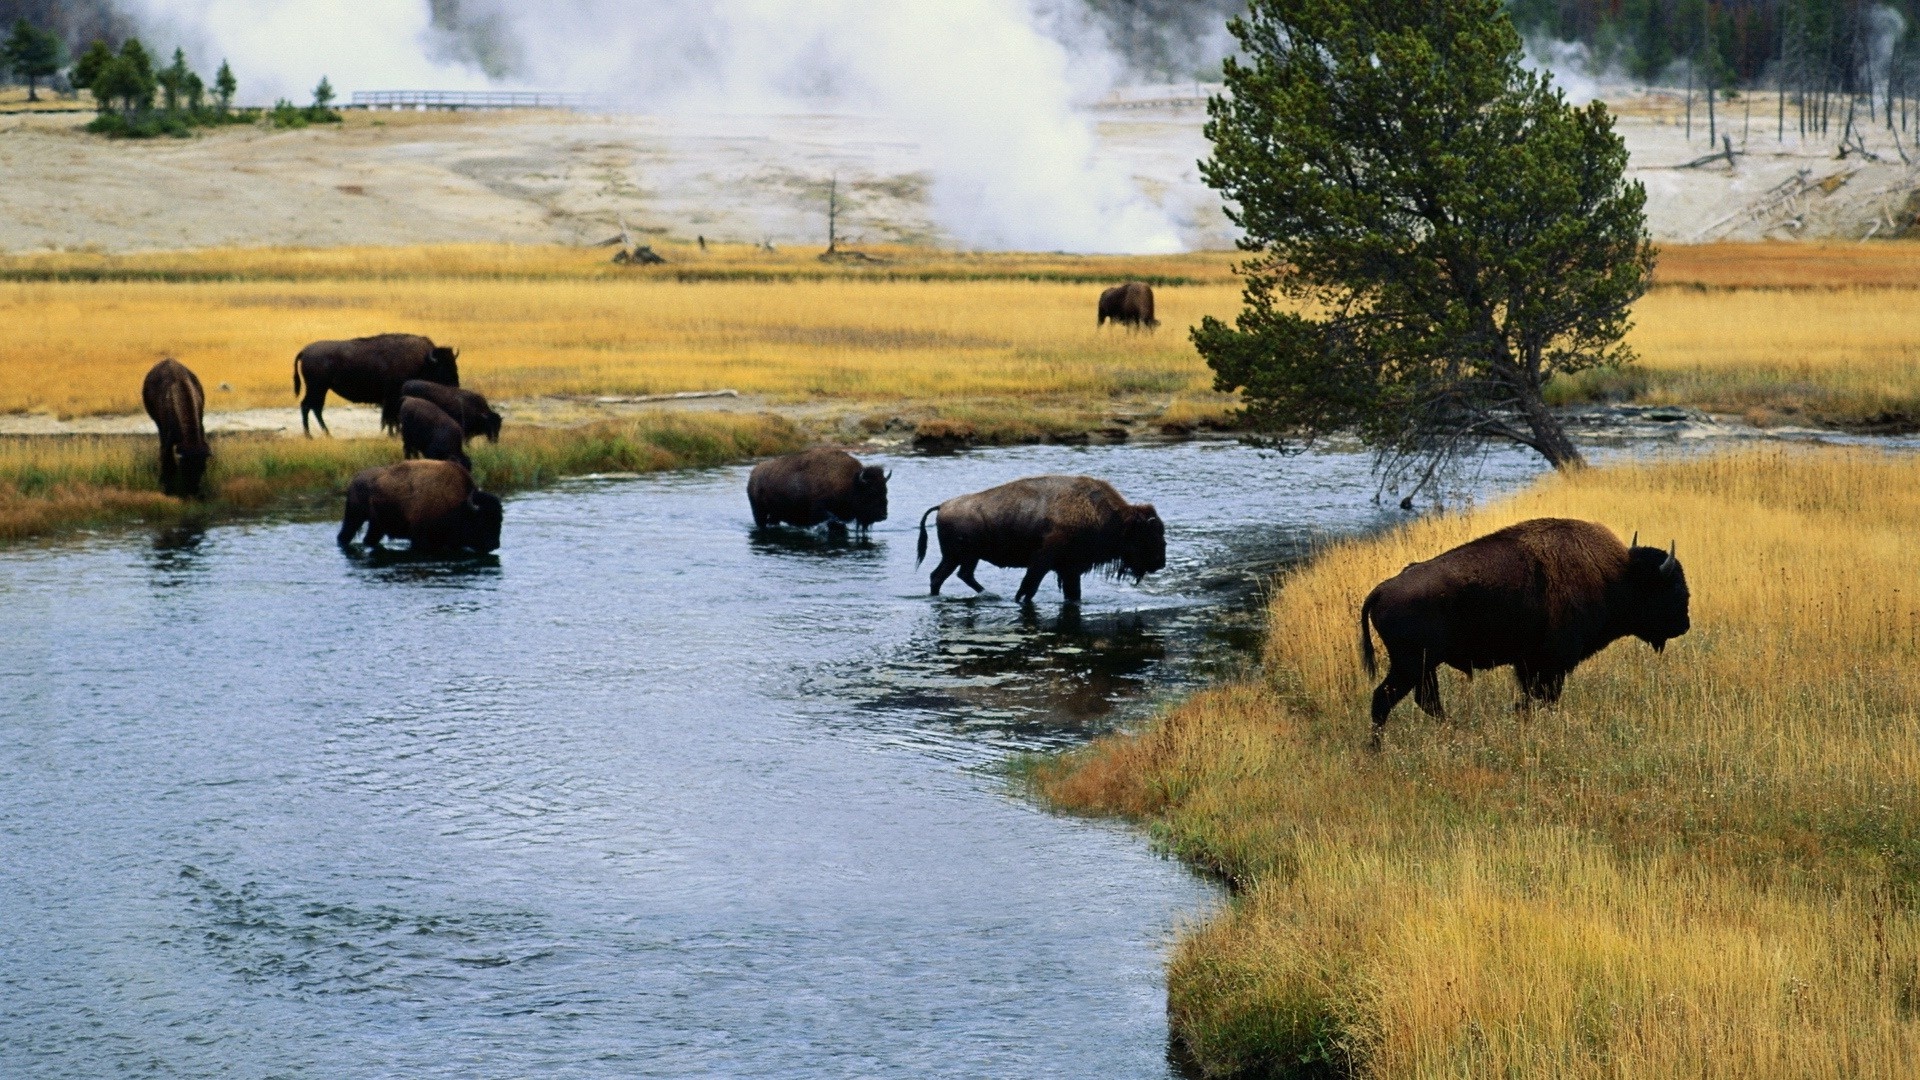 Bison wallpaper, Detailed bison desktop background, High-resolution buffalo image, Captivating buffalo representation, 1920x1080 Full HD Desktop